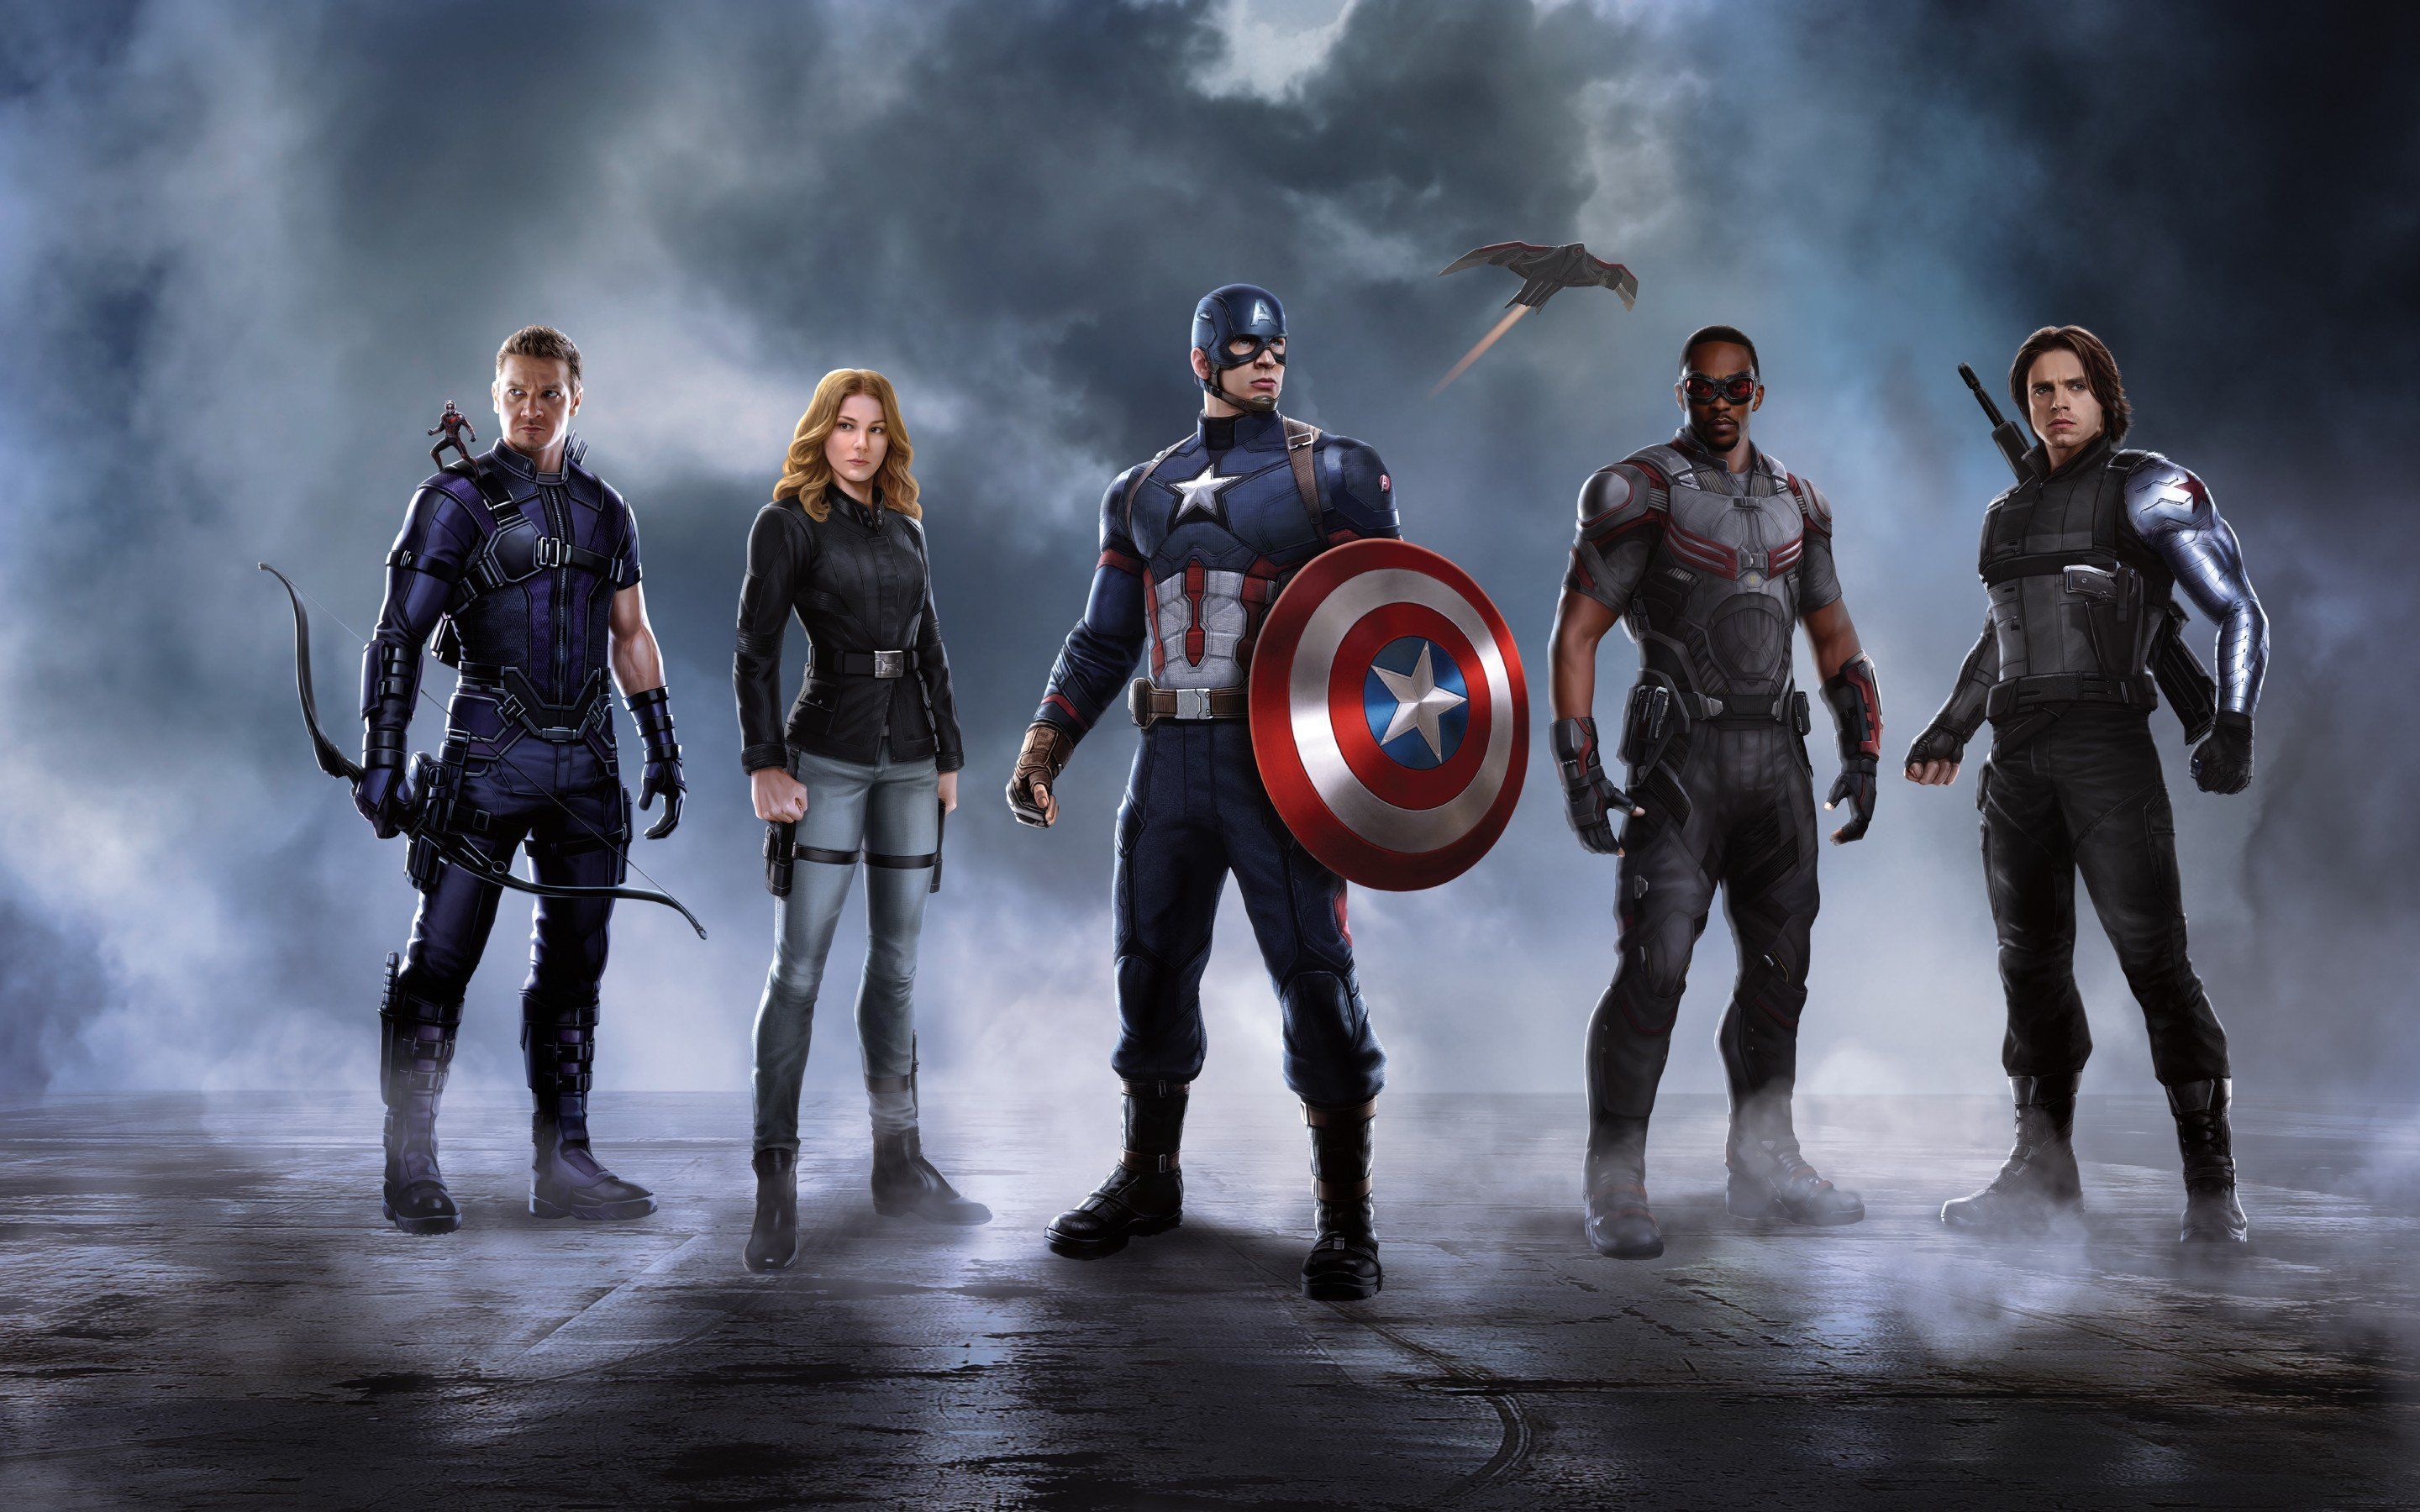 Captain America Civil War 4k Image. Team captain